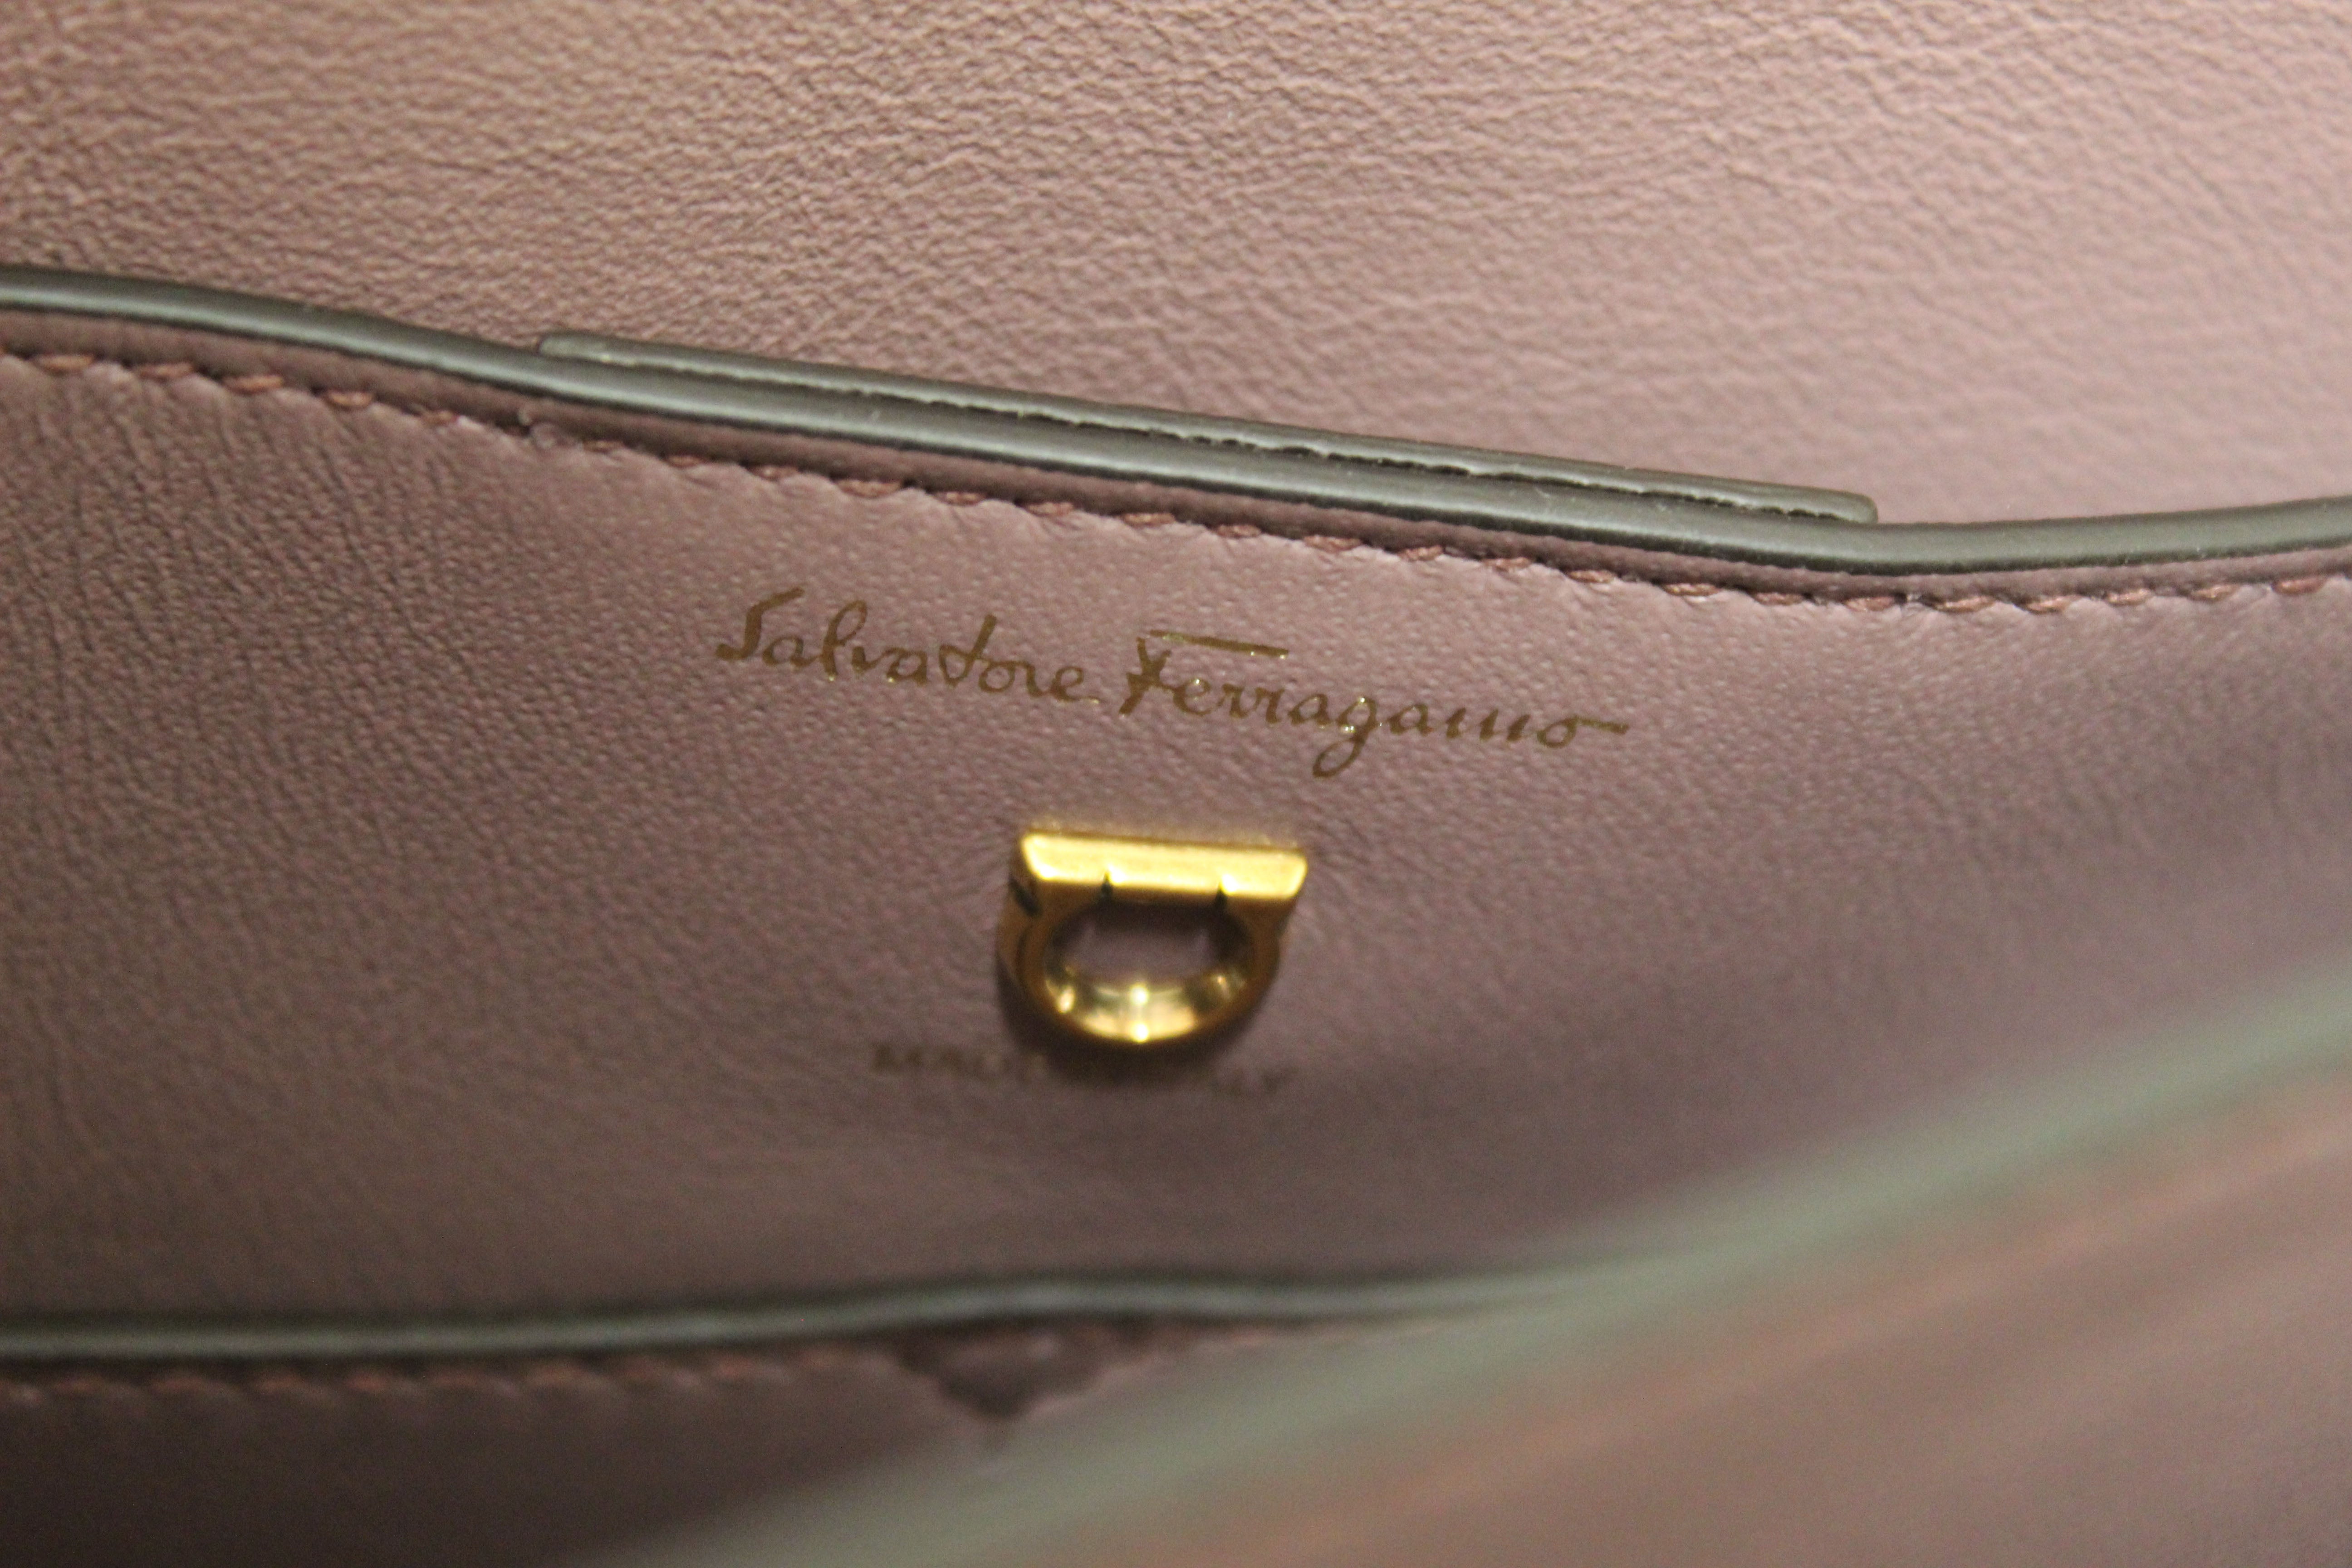 Authentic Salvatore Ferragamo Purple Pebbled Calf Leather Margot Small Top Handle Satchel Bag